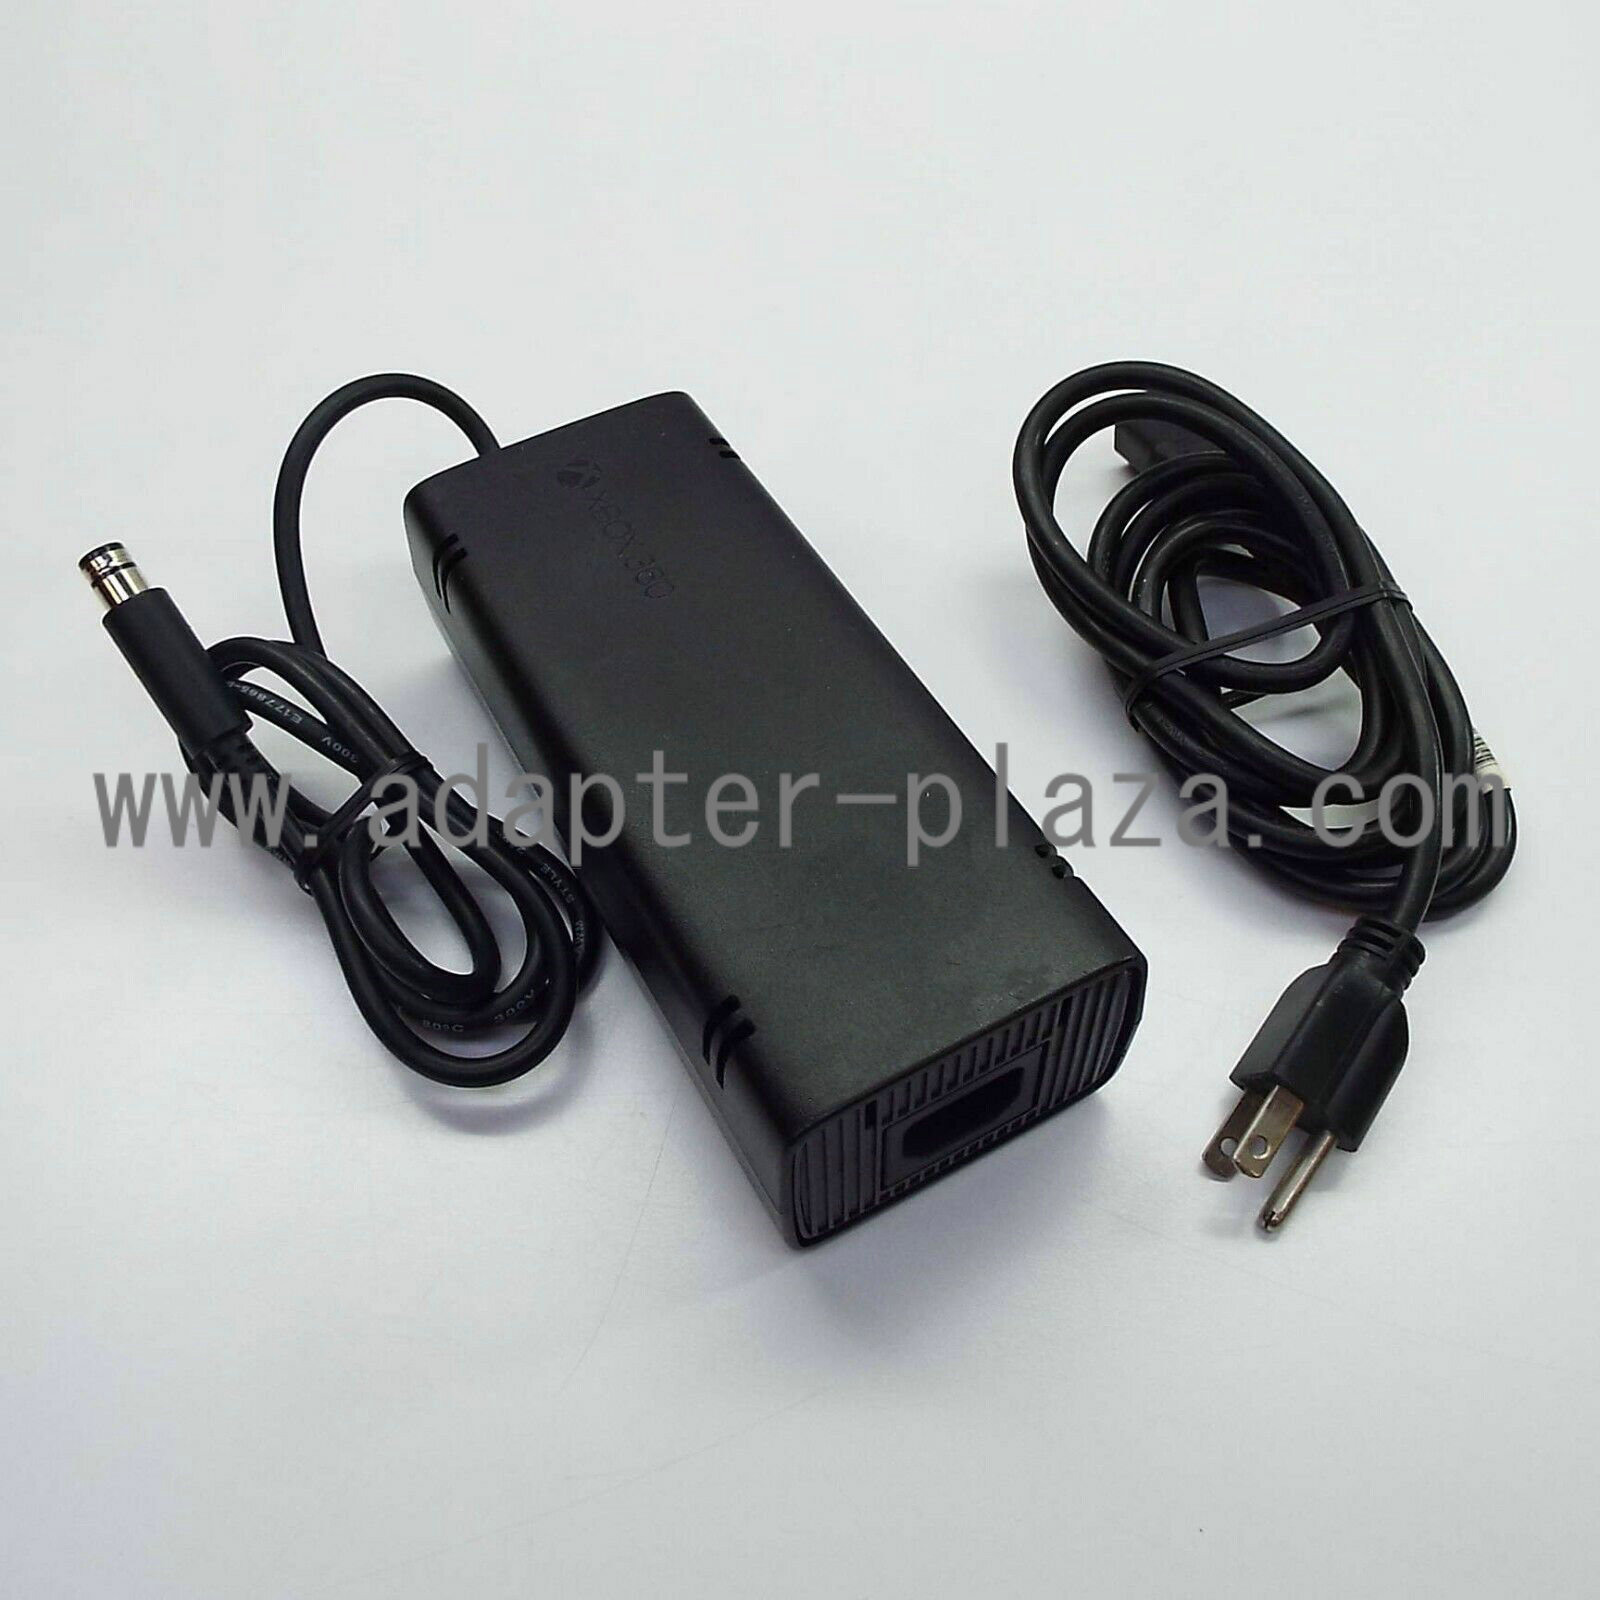 *Brand NEW* Microsoft XBOX 360-S Slim Power AC ADAPTER PB-2121-03M1 AC DC Adapter POWER SUPPLY